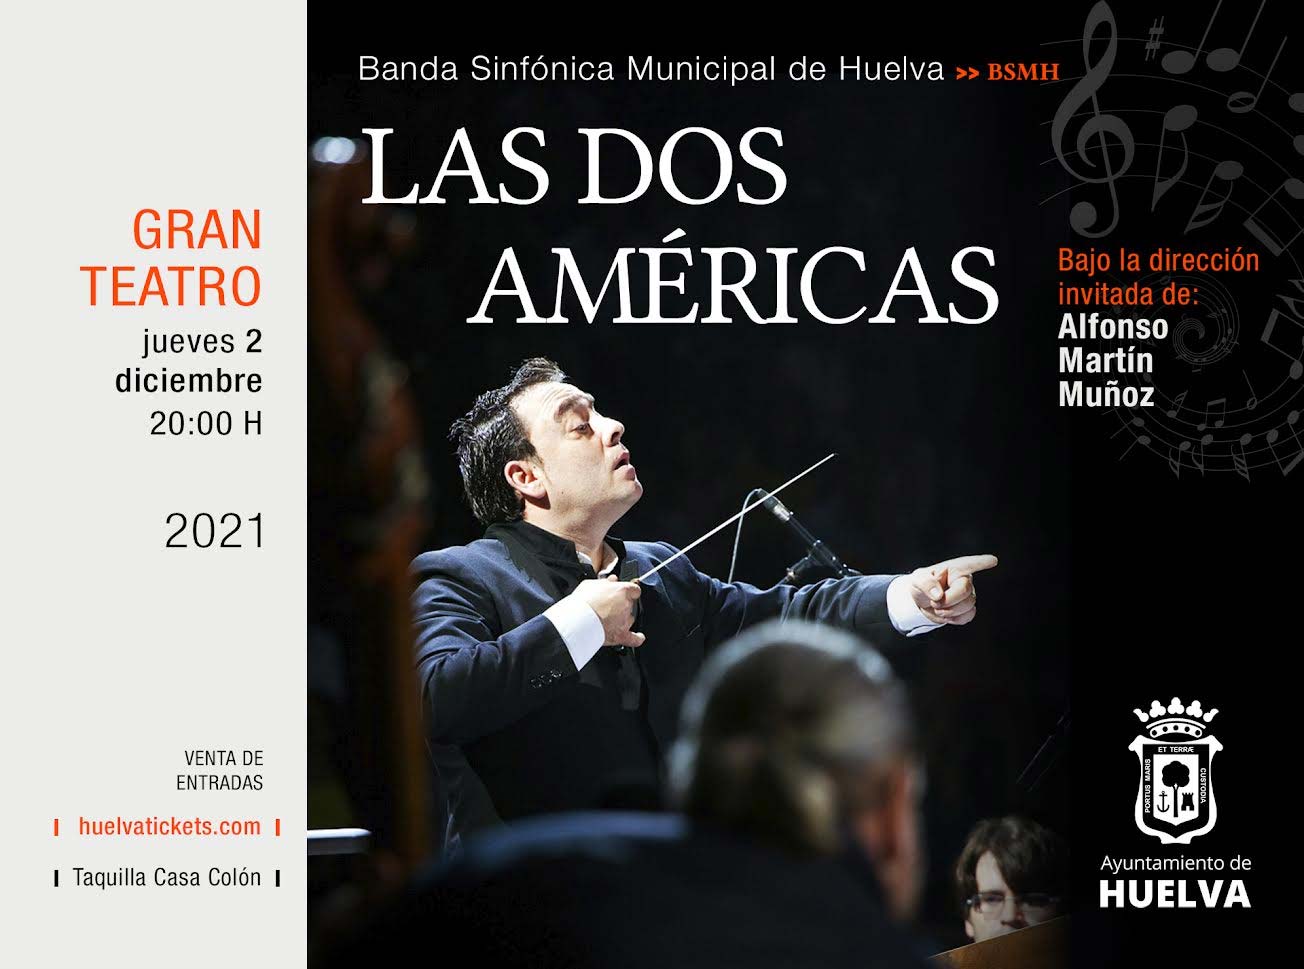 concierto las dos americas 2 de diciembre banda sinfonica don Benito